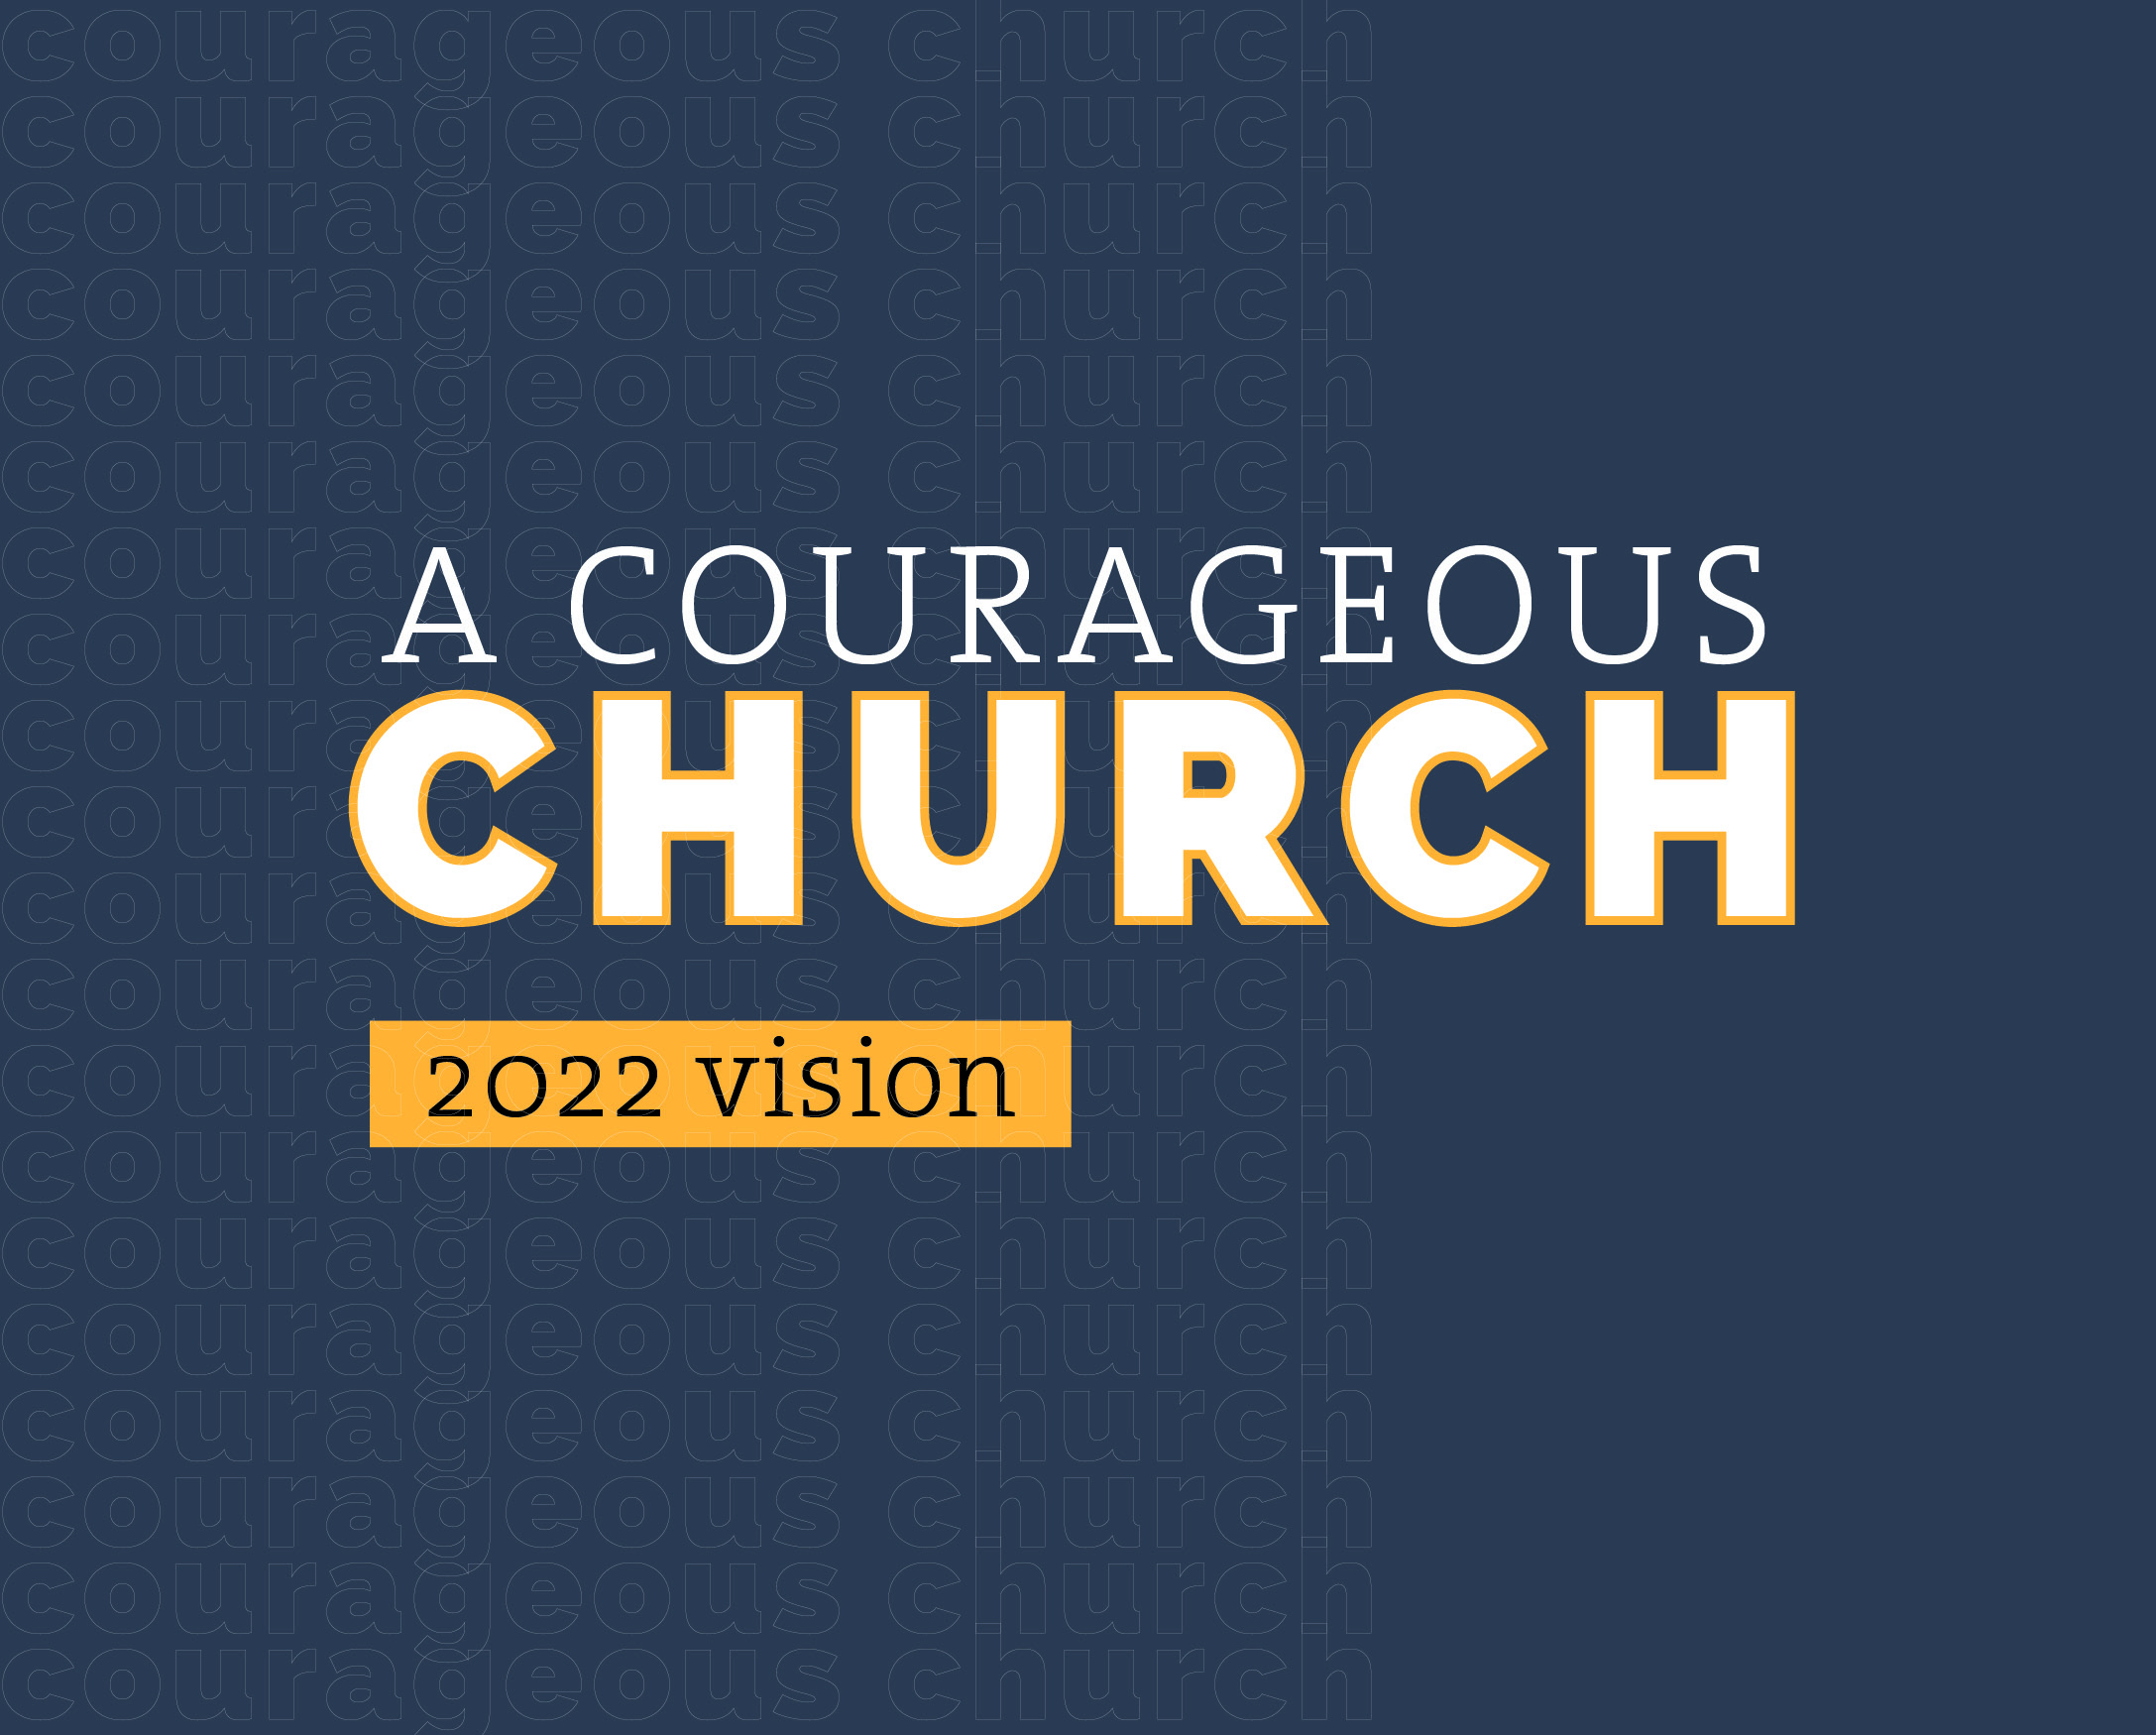 A Courageous Church: We Please God, not Men